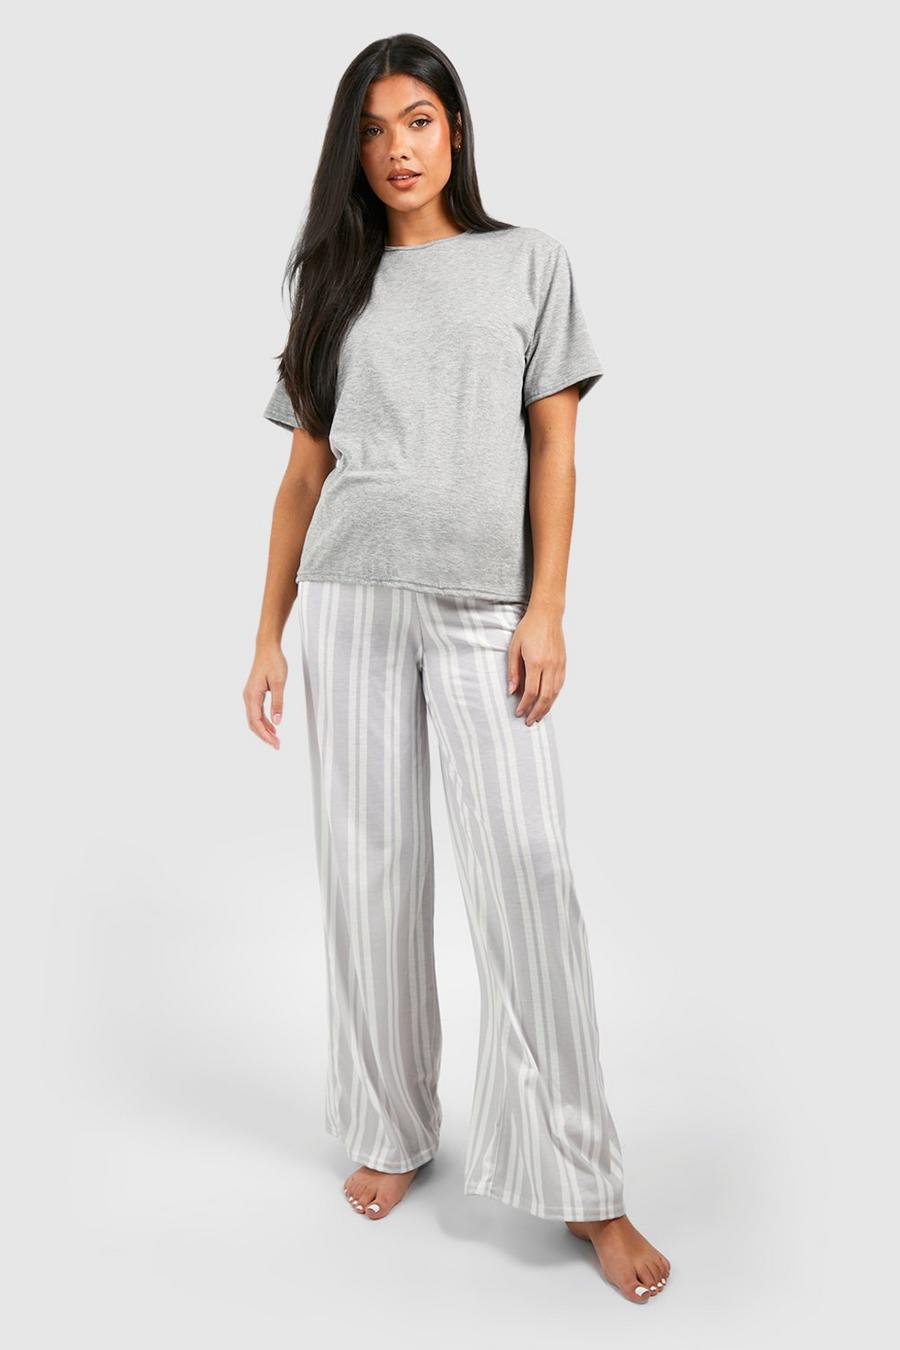 Grey marl grigio Maternity Stripe Pyjama Set